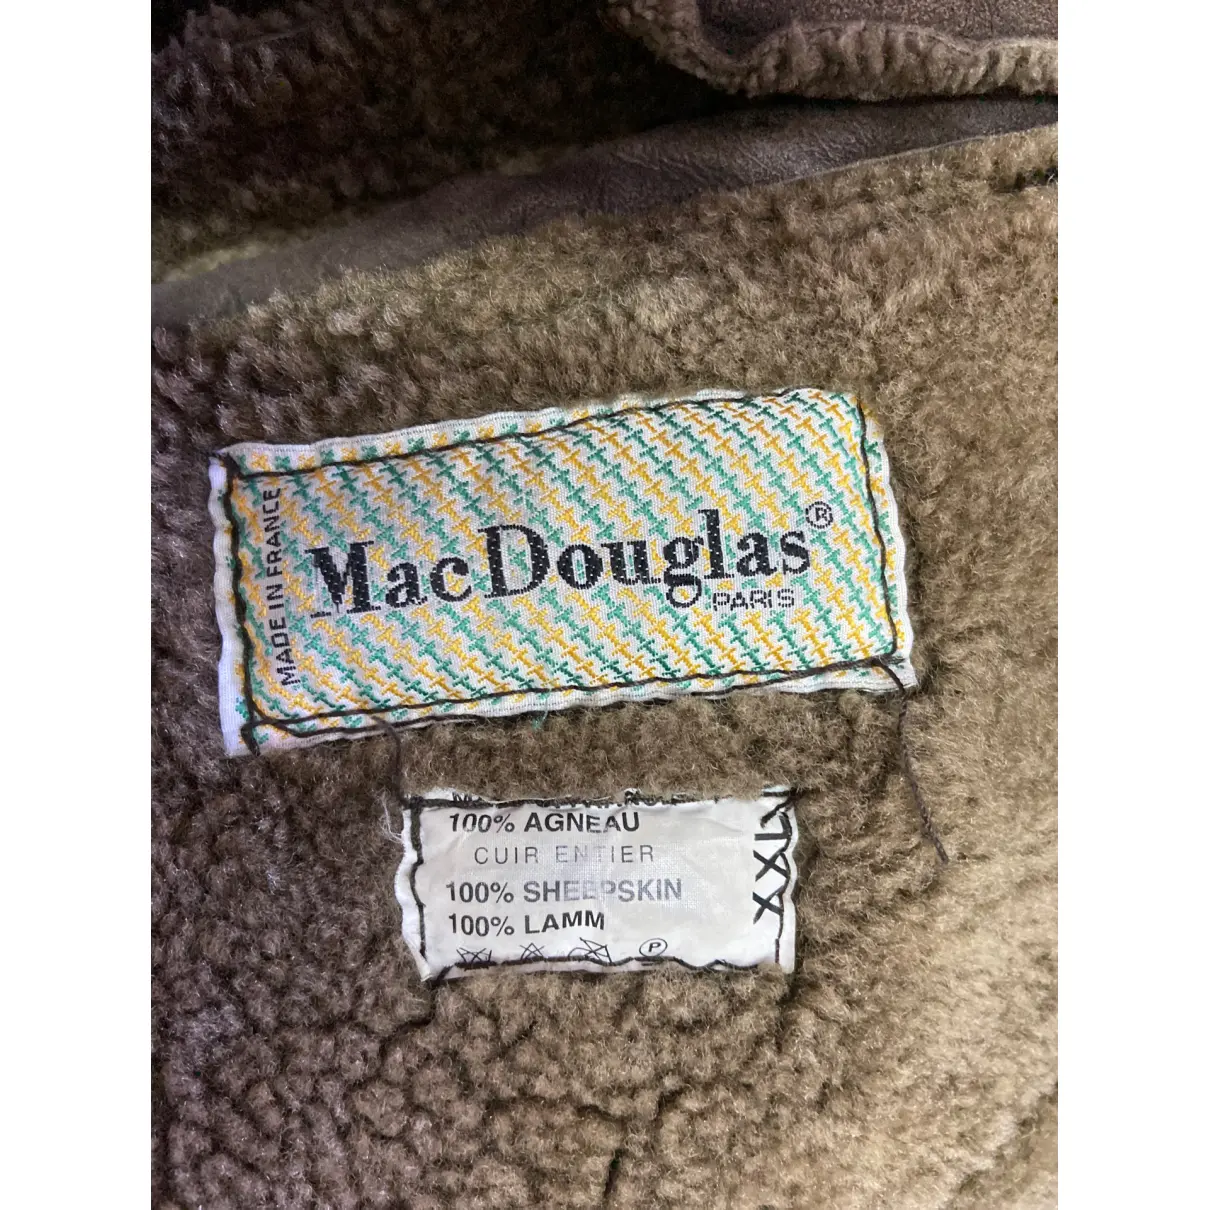 Buy Mac Douglas Leather coat online - Vintage